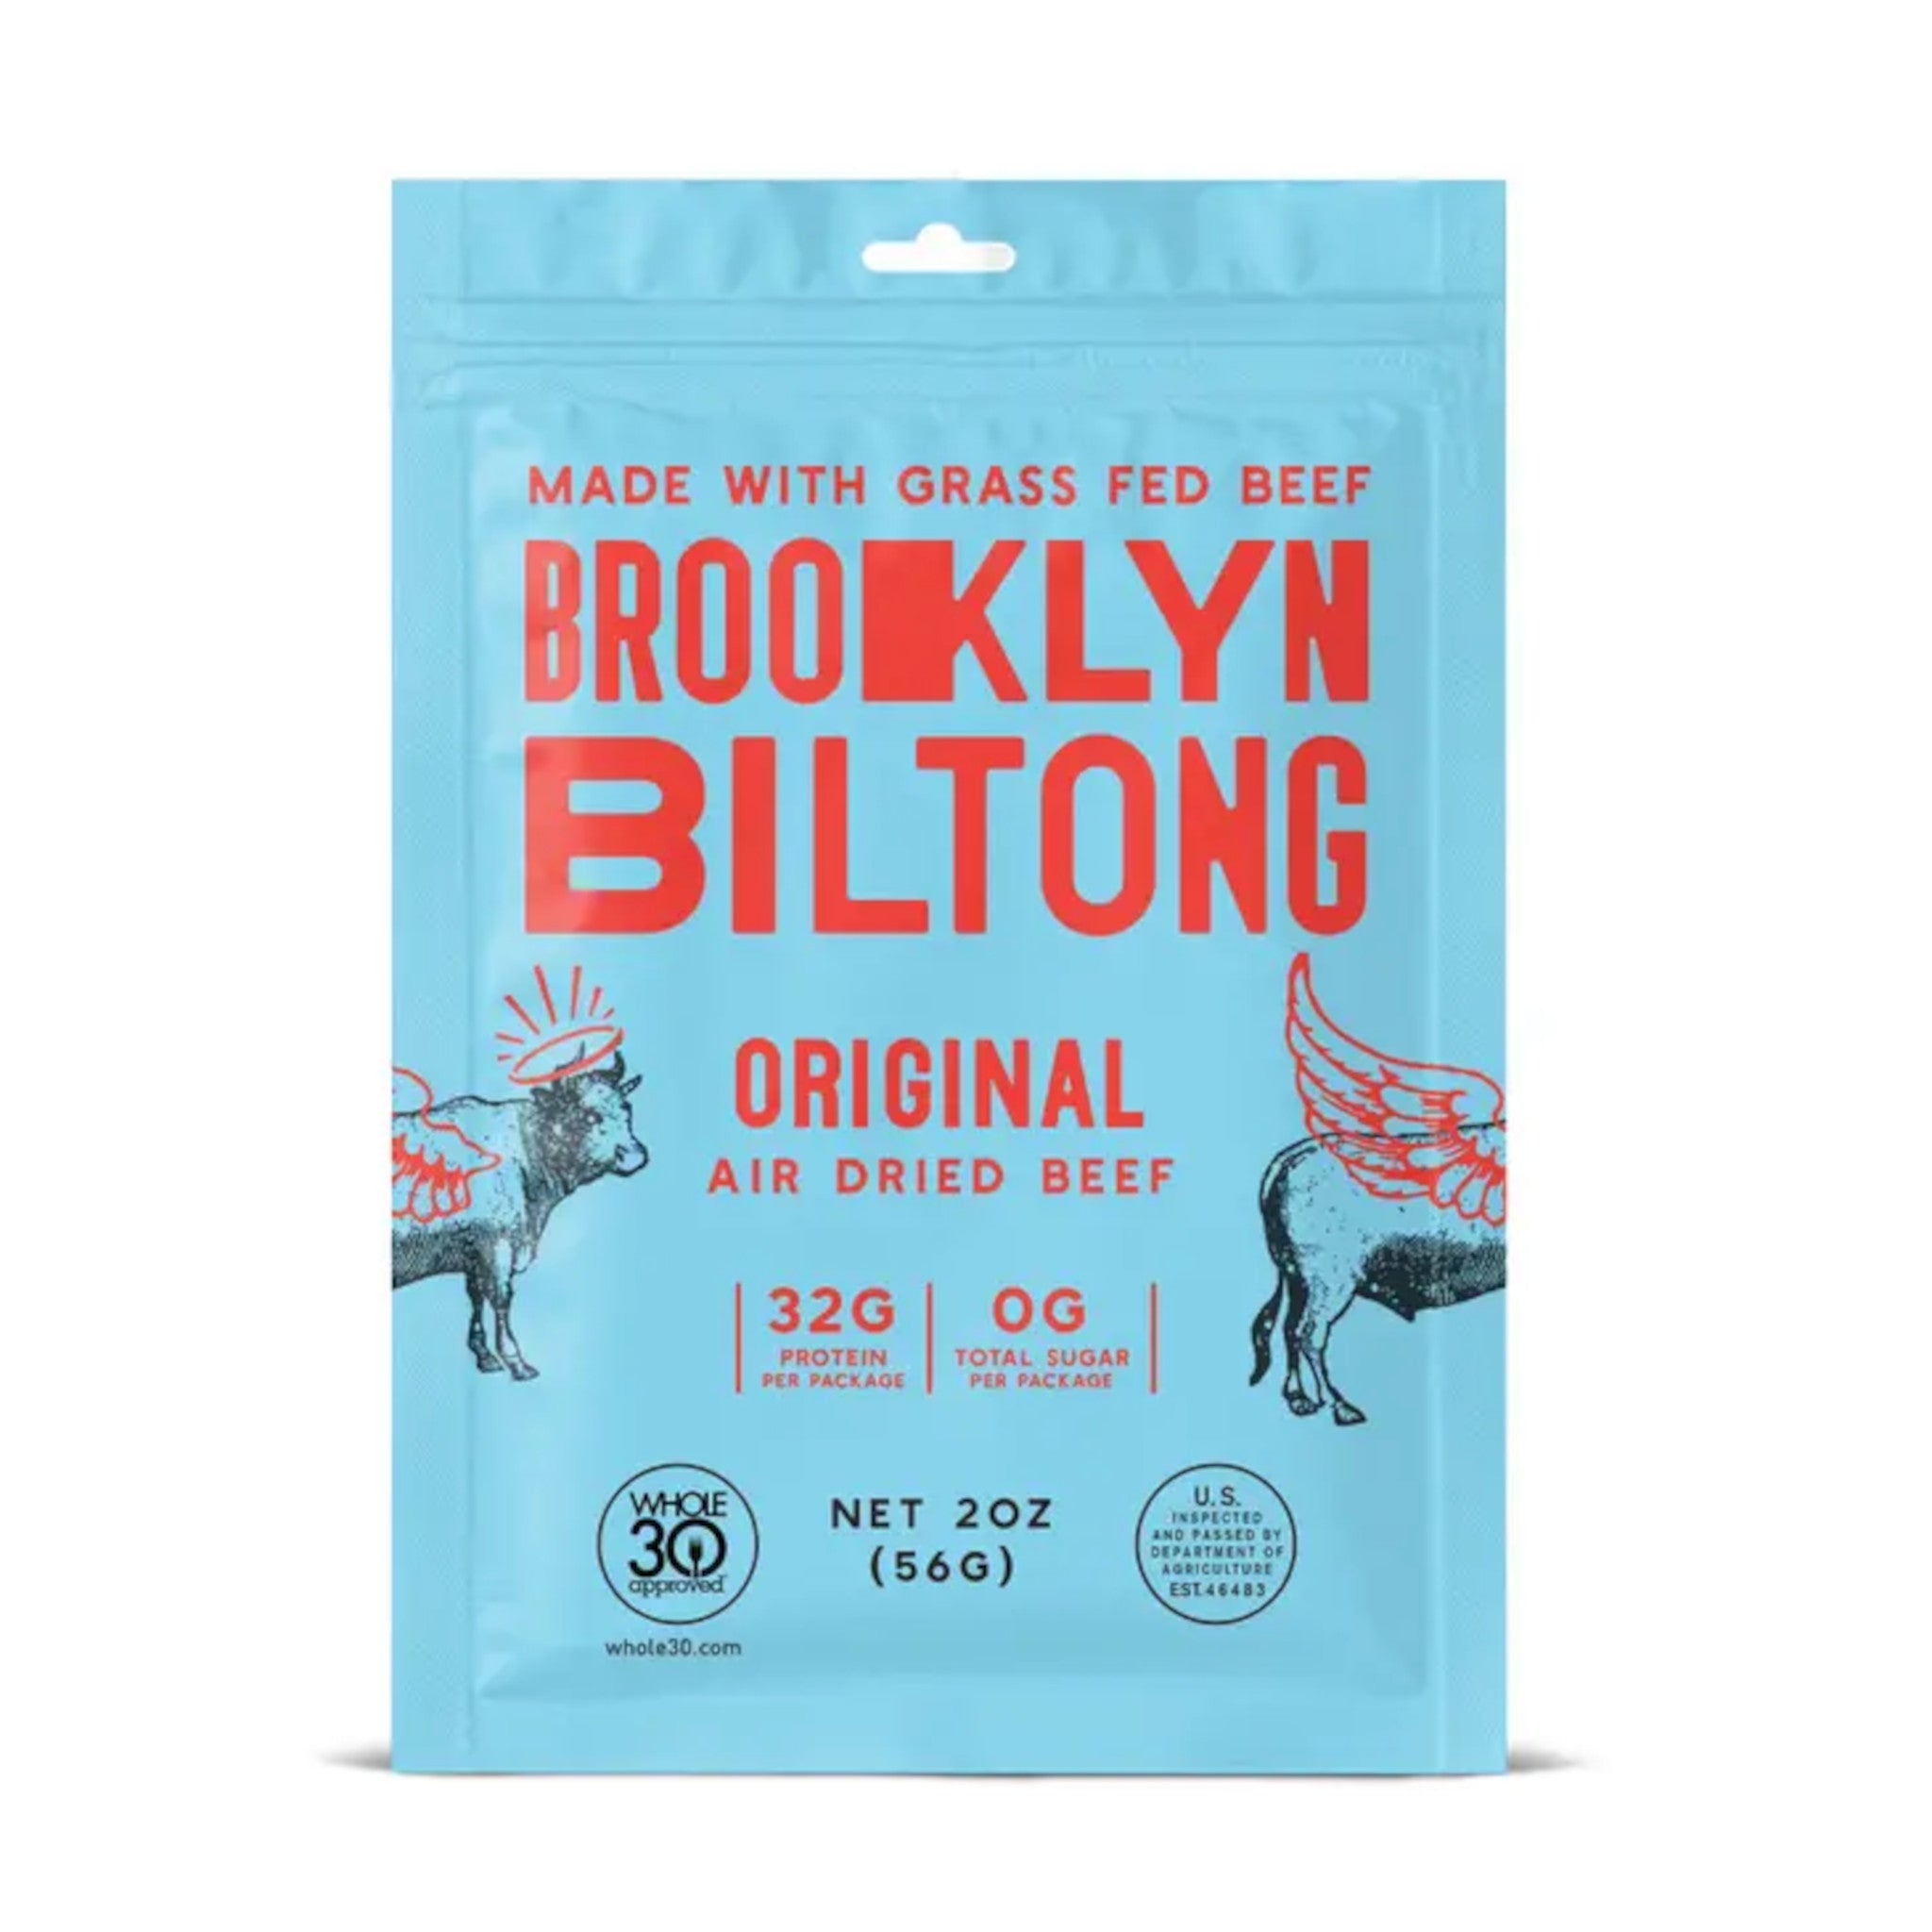 Naked Meat Flavor – Brooklyn Biltong